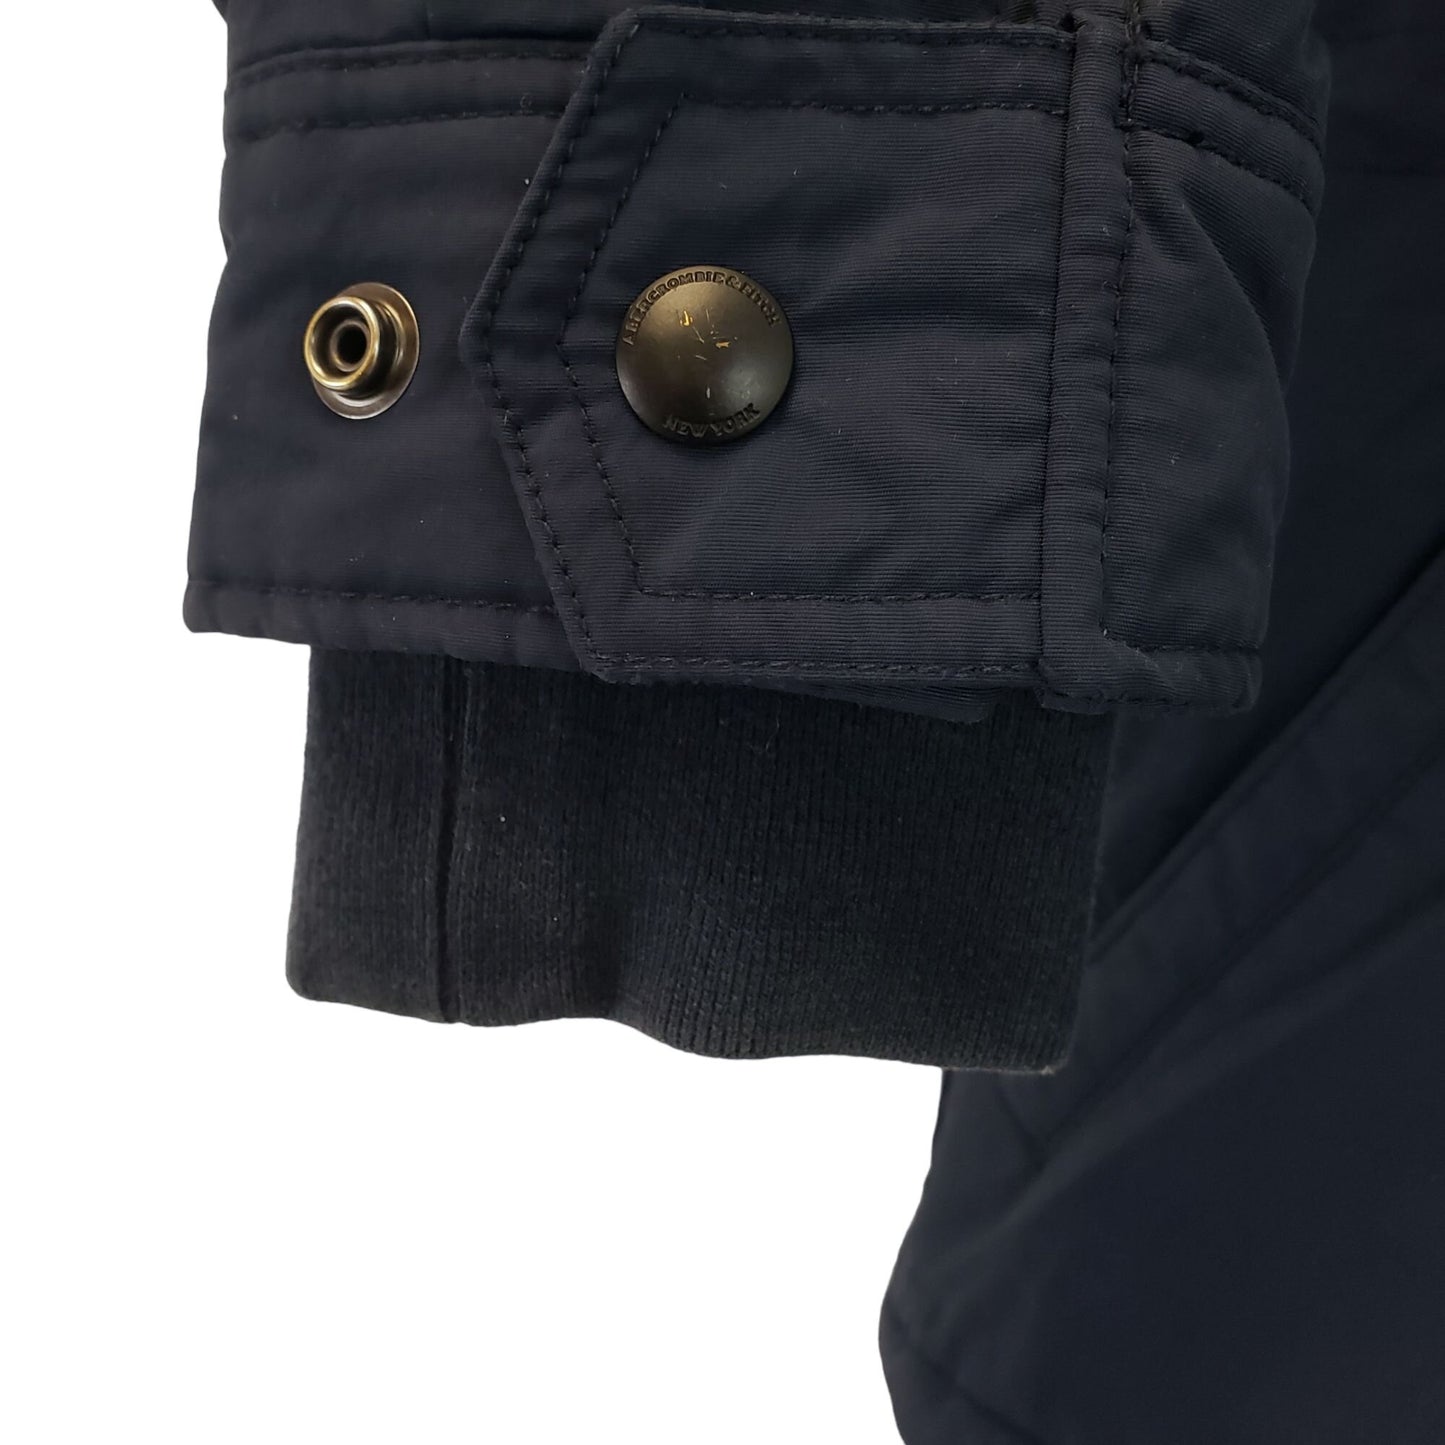 Abercrombie & Fitch Trekking Hooded Parka Jacket Coat Size XS